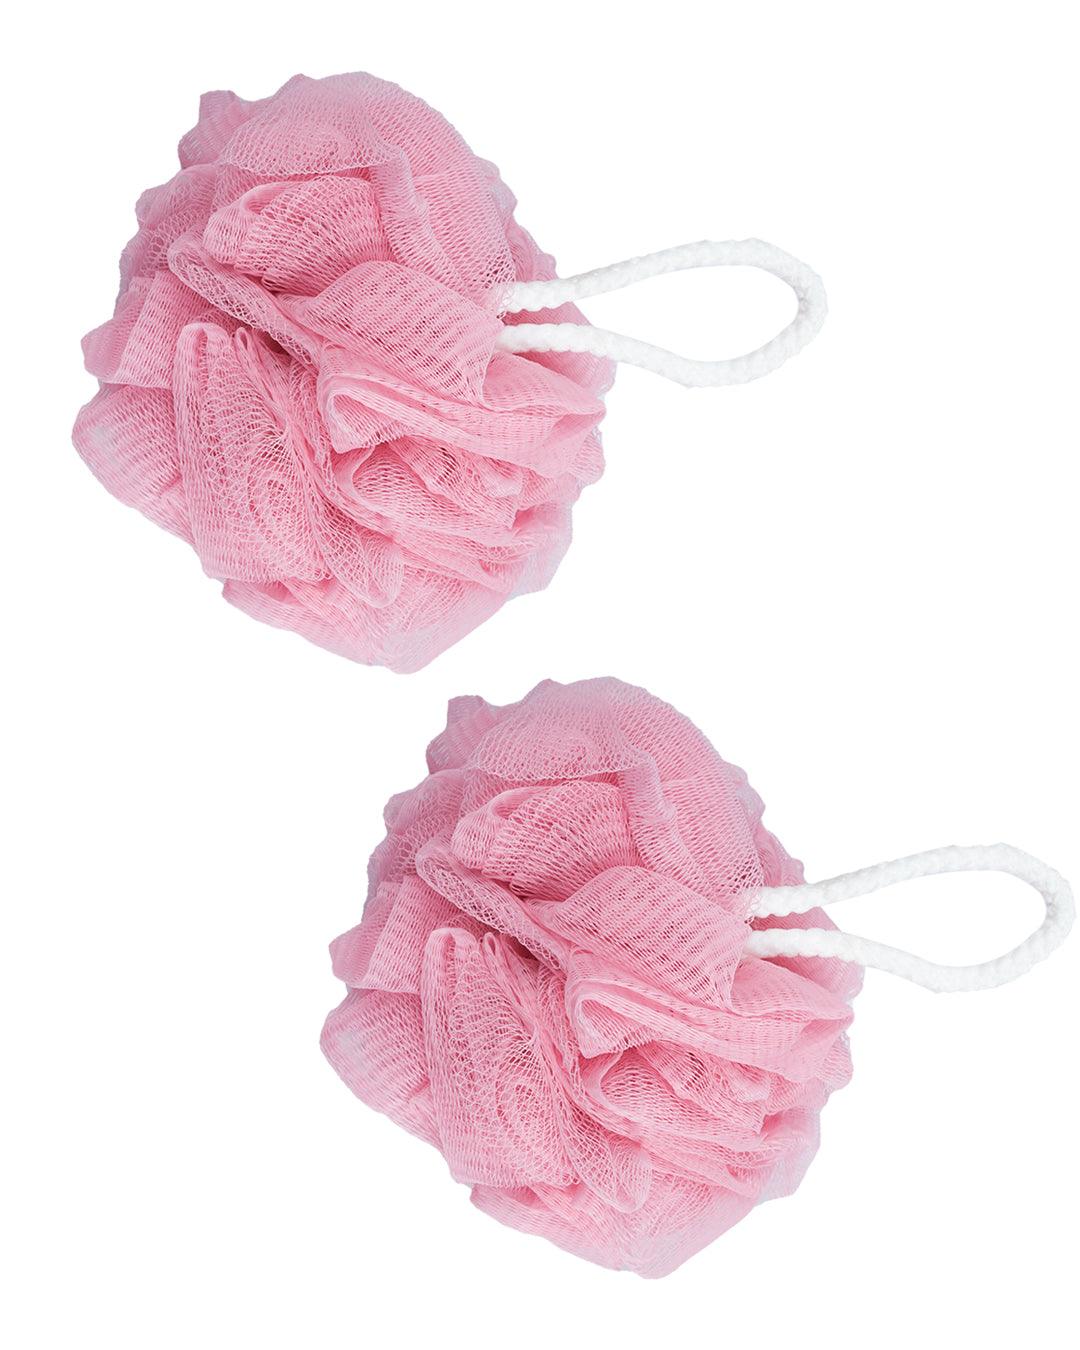 BB Home Body Bath Loofah Scrubber- Hangable, Pink, 1 pc